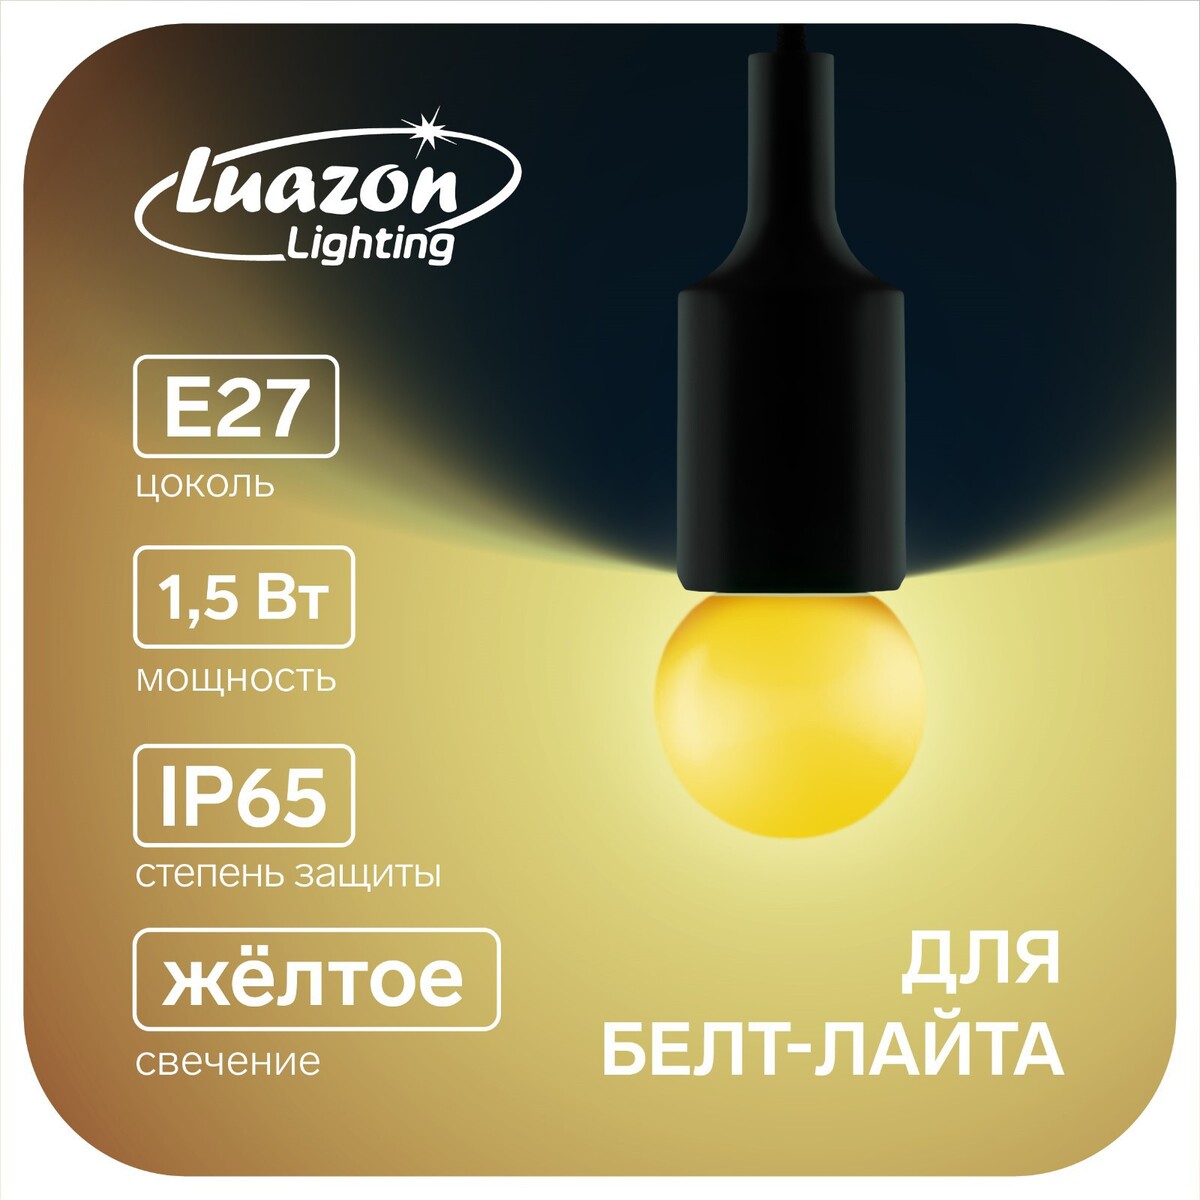 Лампа светодиодная luazon lighting, g45, е27, 1.5 вт, для белт-лайта, желтая, наб 20 шт лампа светодиодная skyway t10 w5w 12 в 24 диода без цоколя s08201113